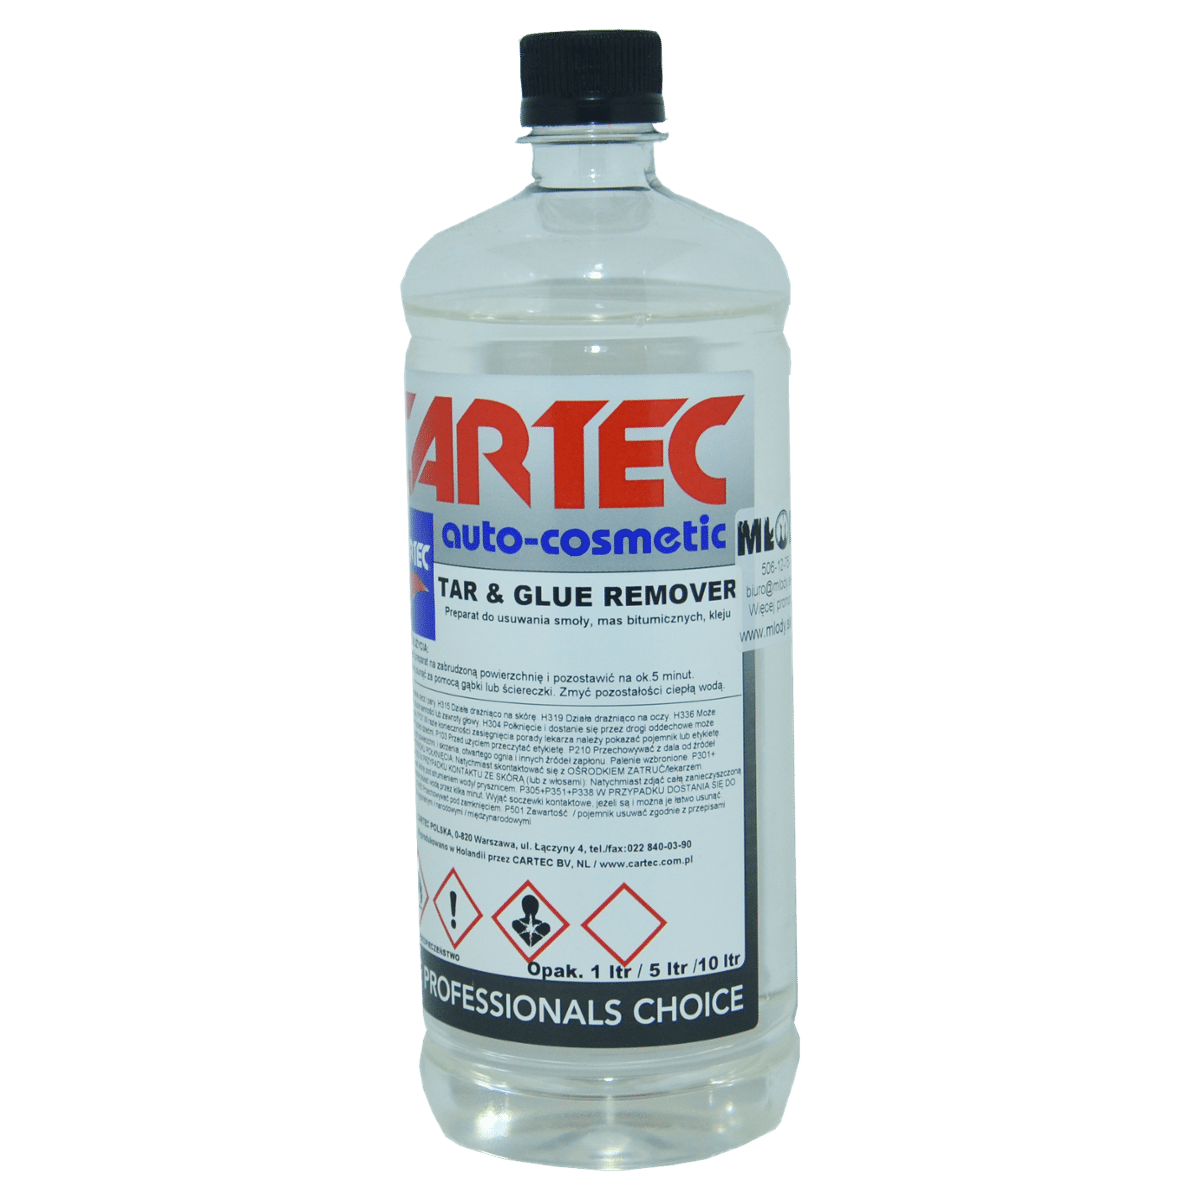 CARTEC Tar&Glue Remover 1l Preparat do Usuwania Smoły Mas Bitumicznych Kleju